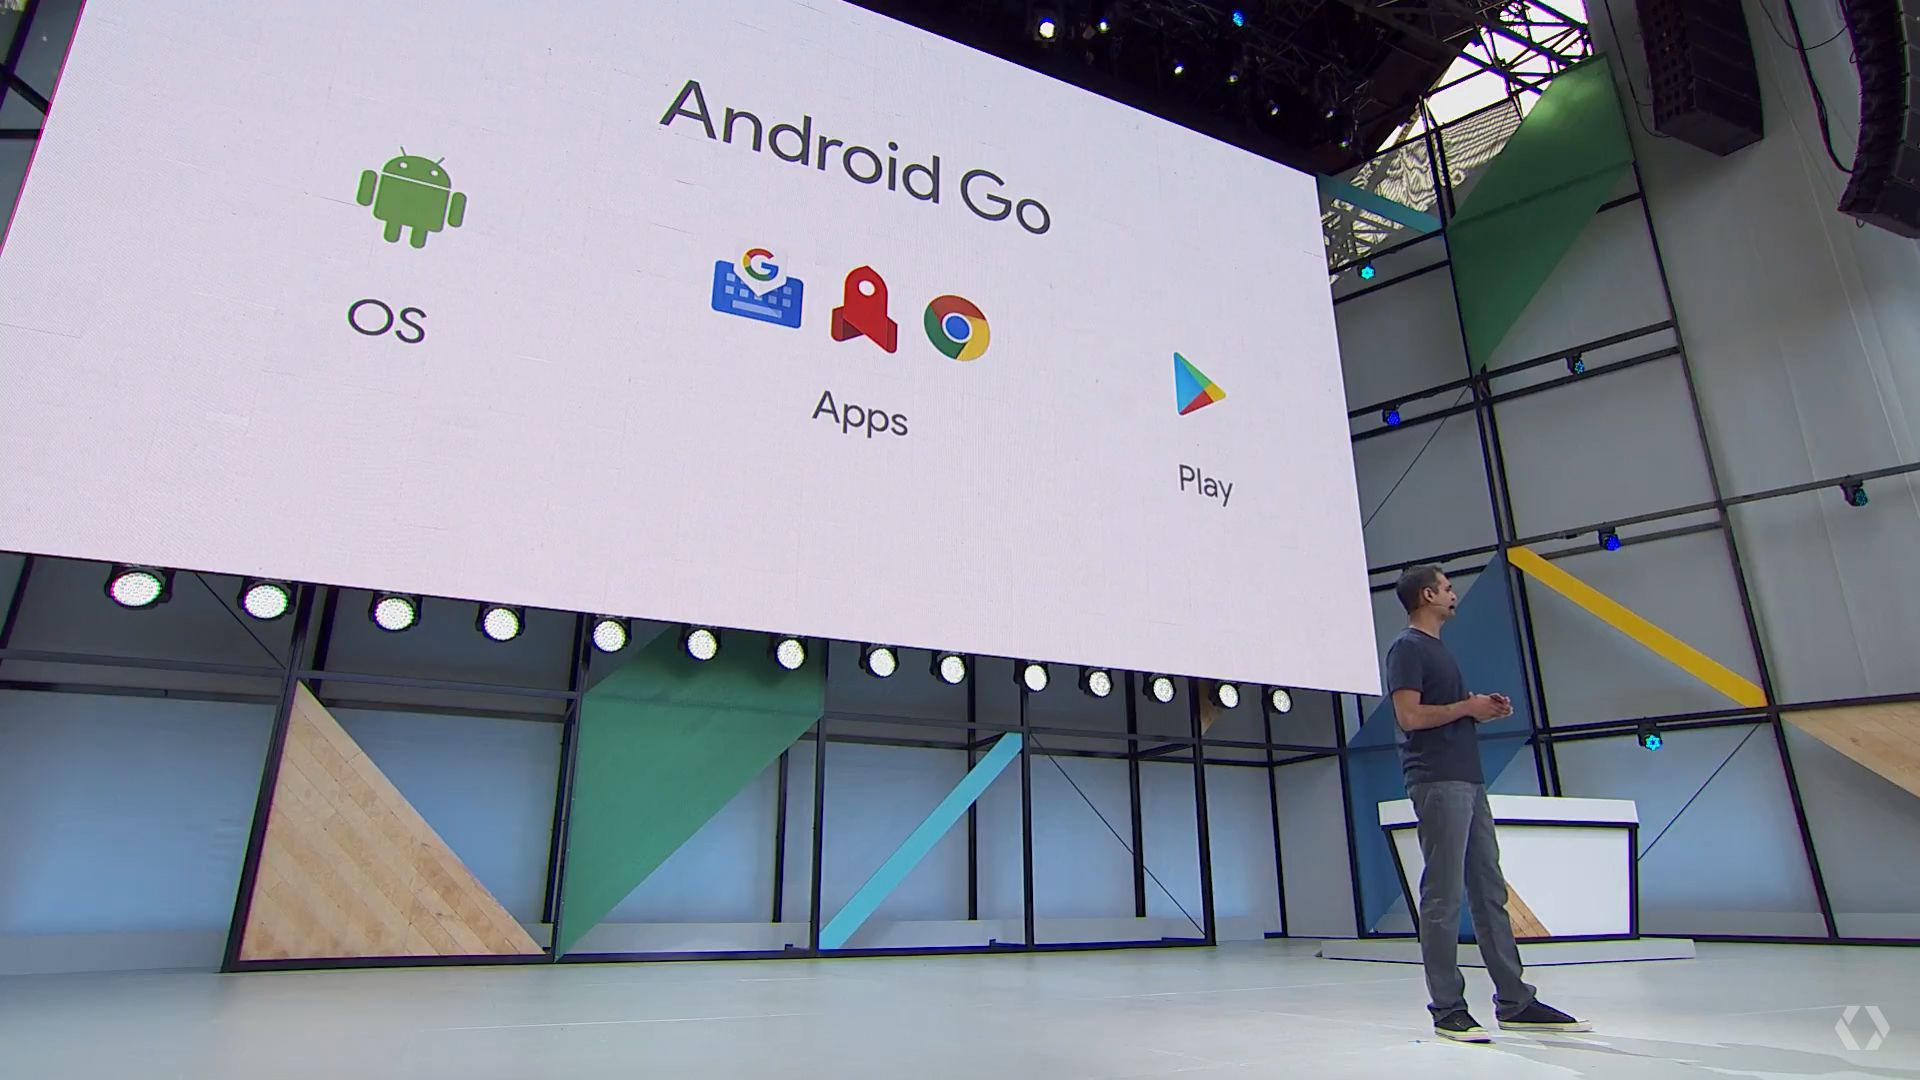 [Google I/O] Google เปิดตัว Android Go ระบบปฏิบัติการ Android สำหรับสมาร์ทโฟนสเปคต่ำ